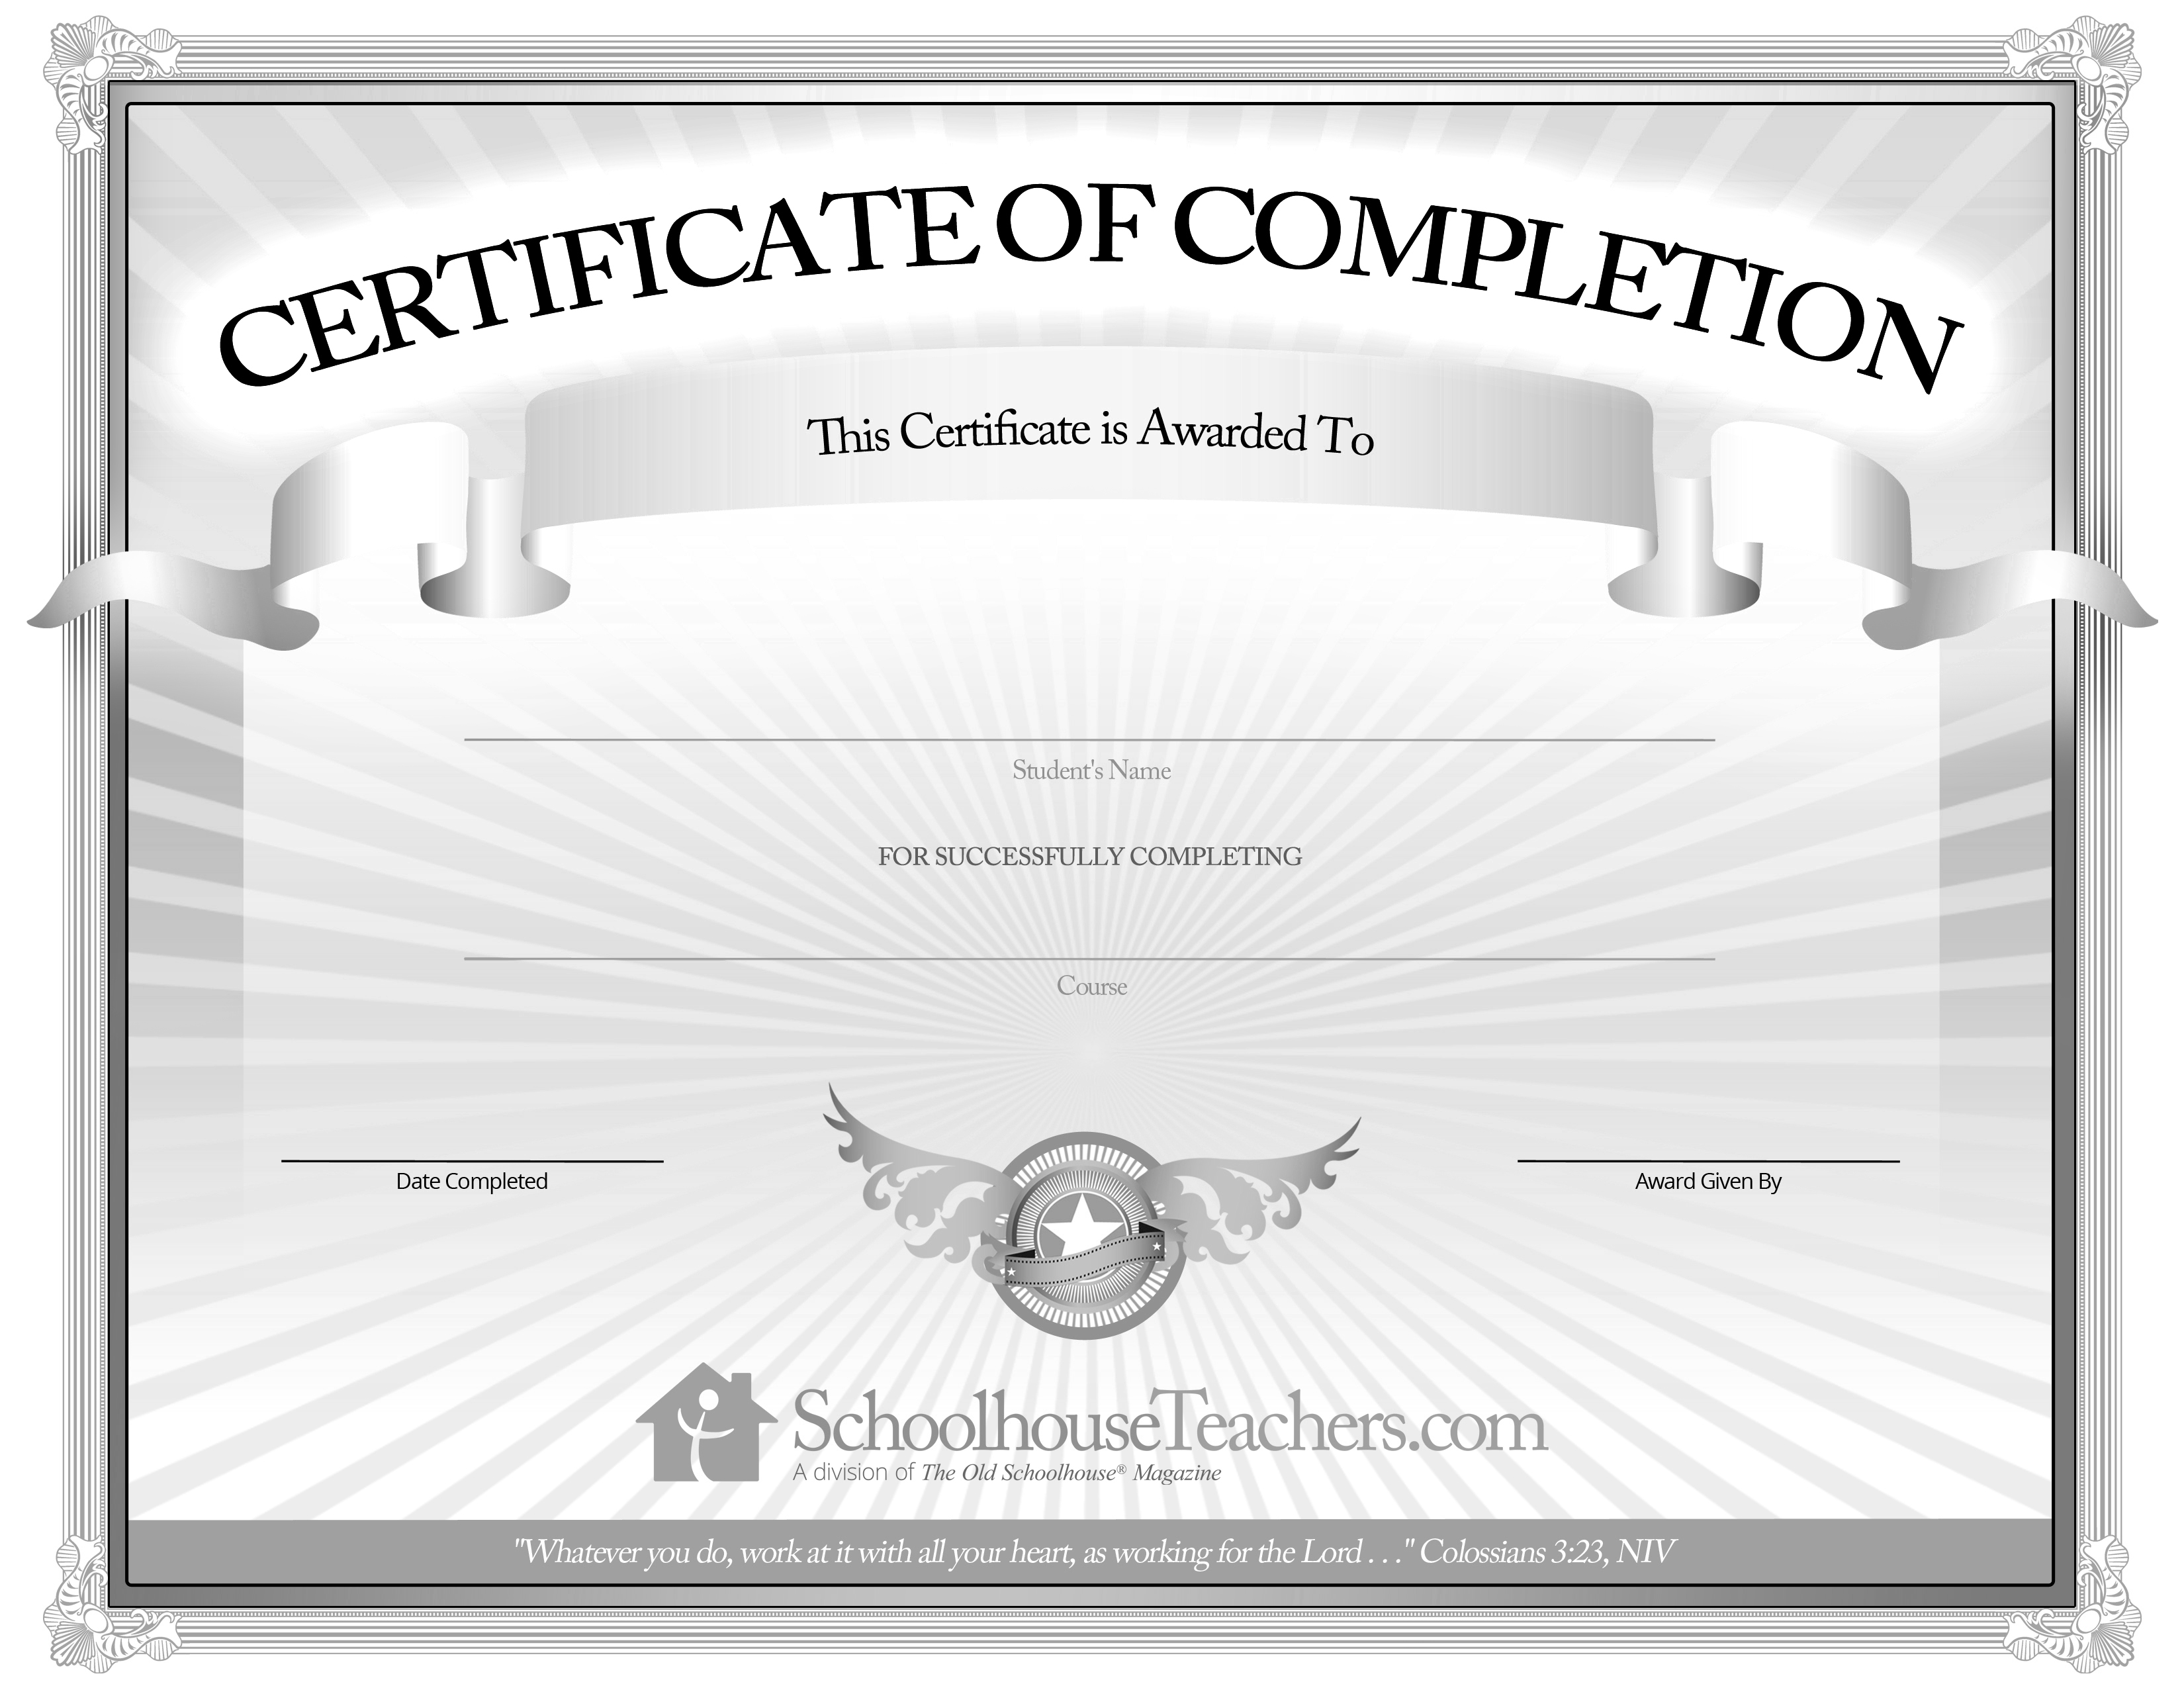 Certificate Library - Awards on SchoolhouseTeachers.com